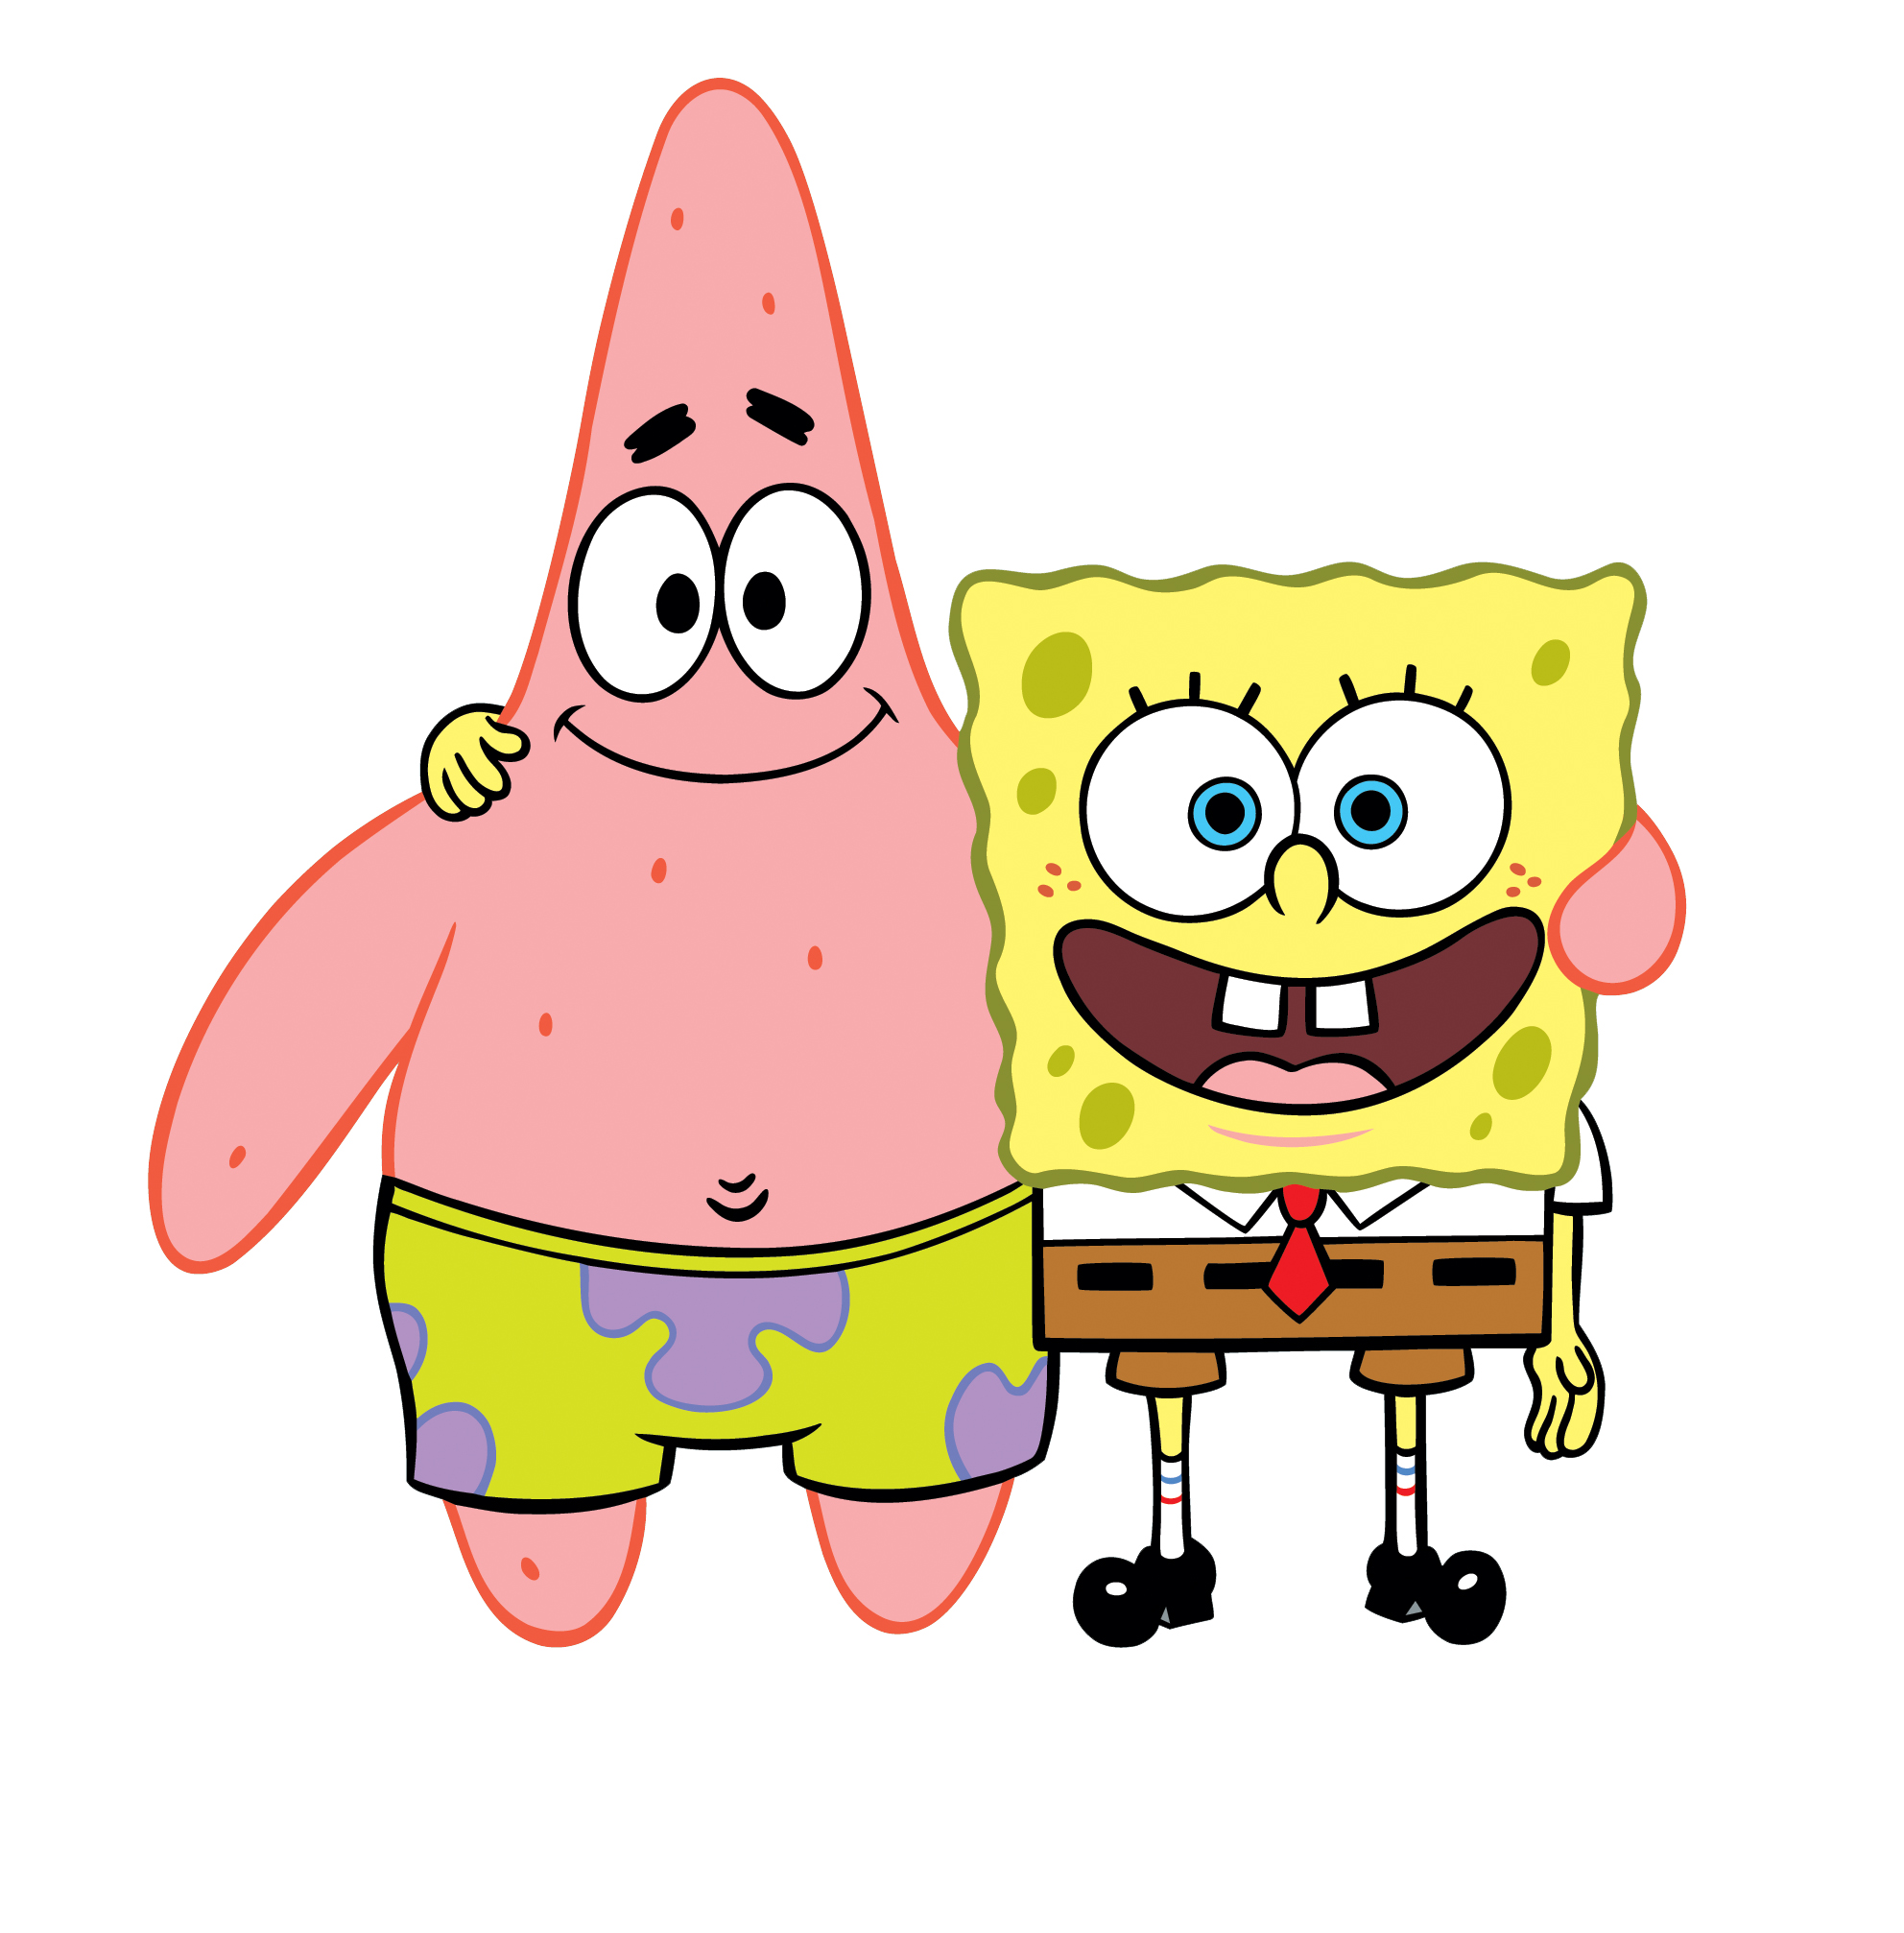 spongebob-patrick-spongebob-squarepants-33210740-1984-2014